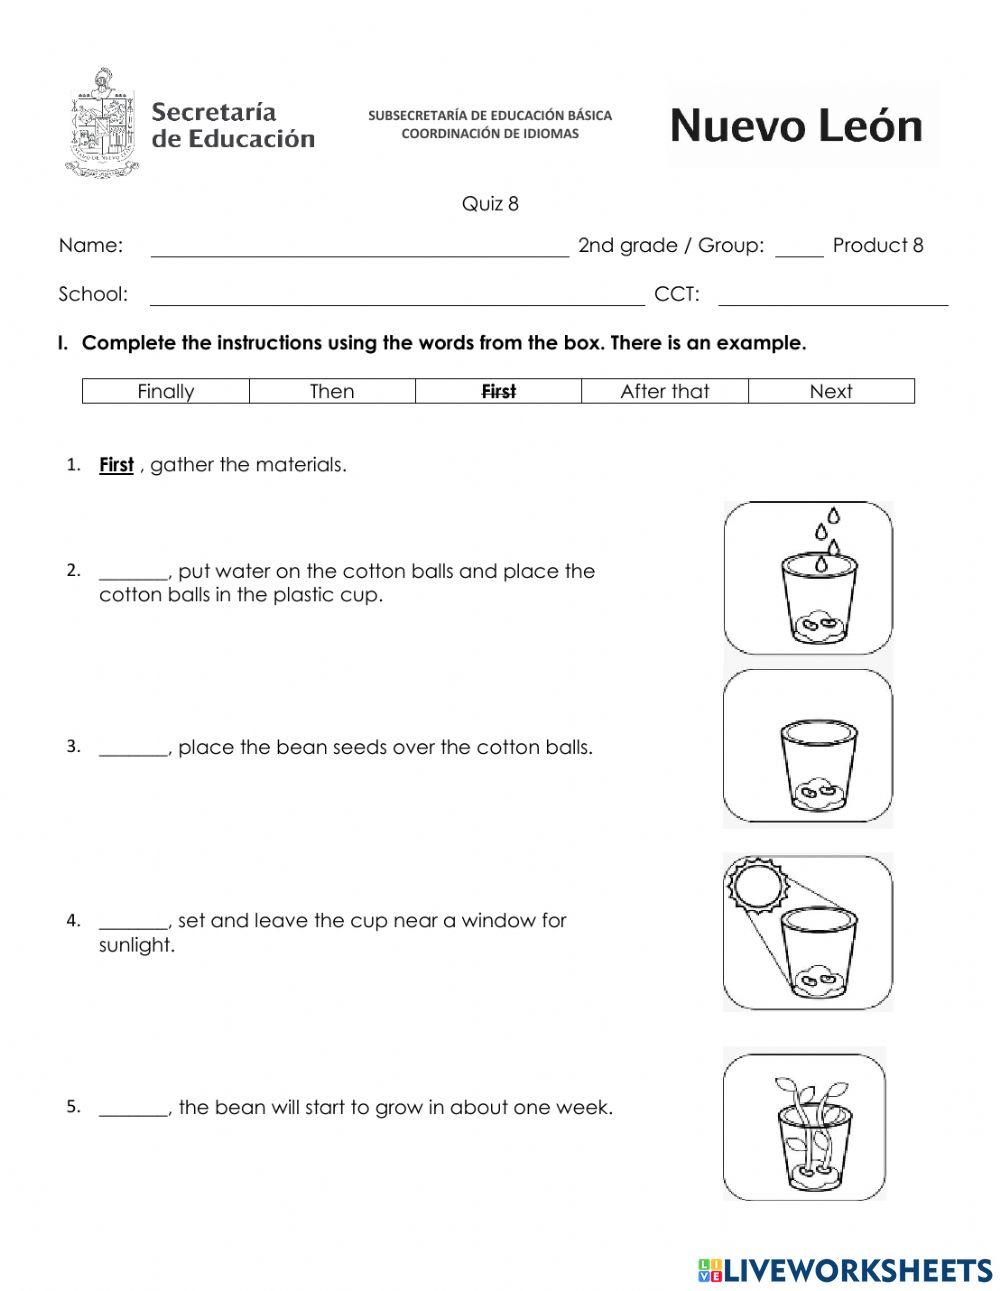 April Quiz - Second Grade - Instructions to Grow a Plant